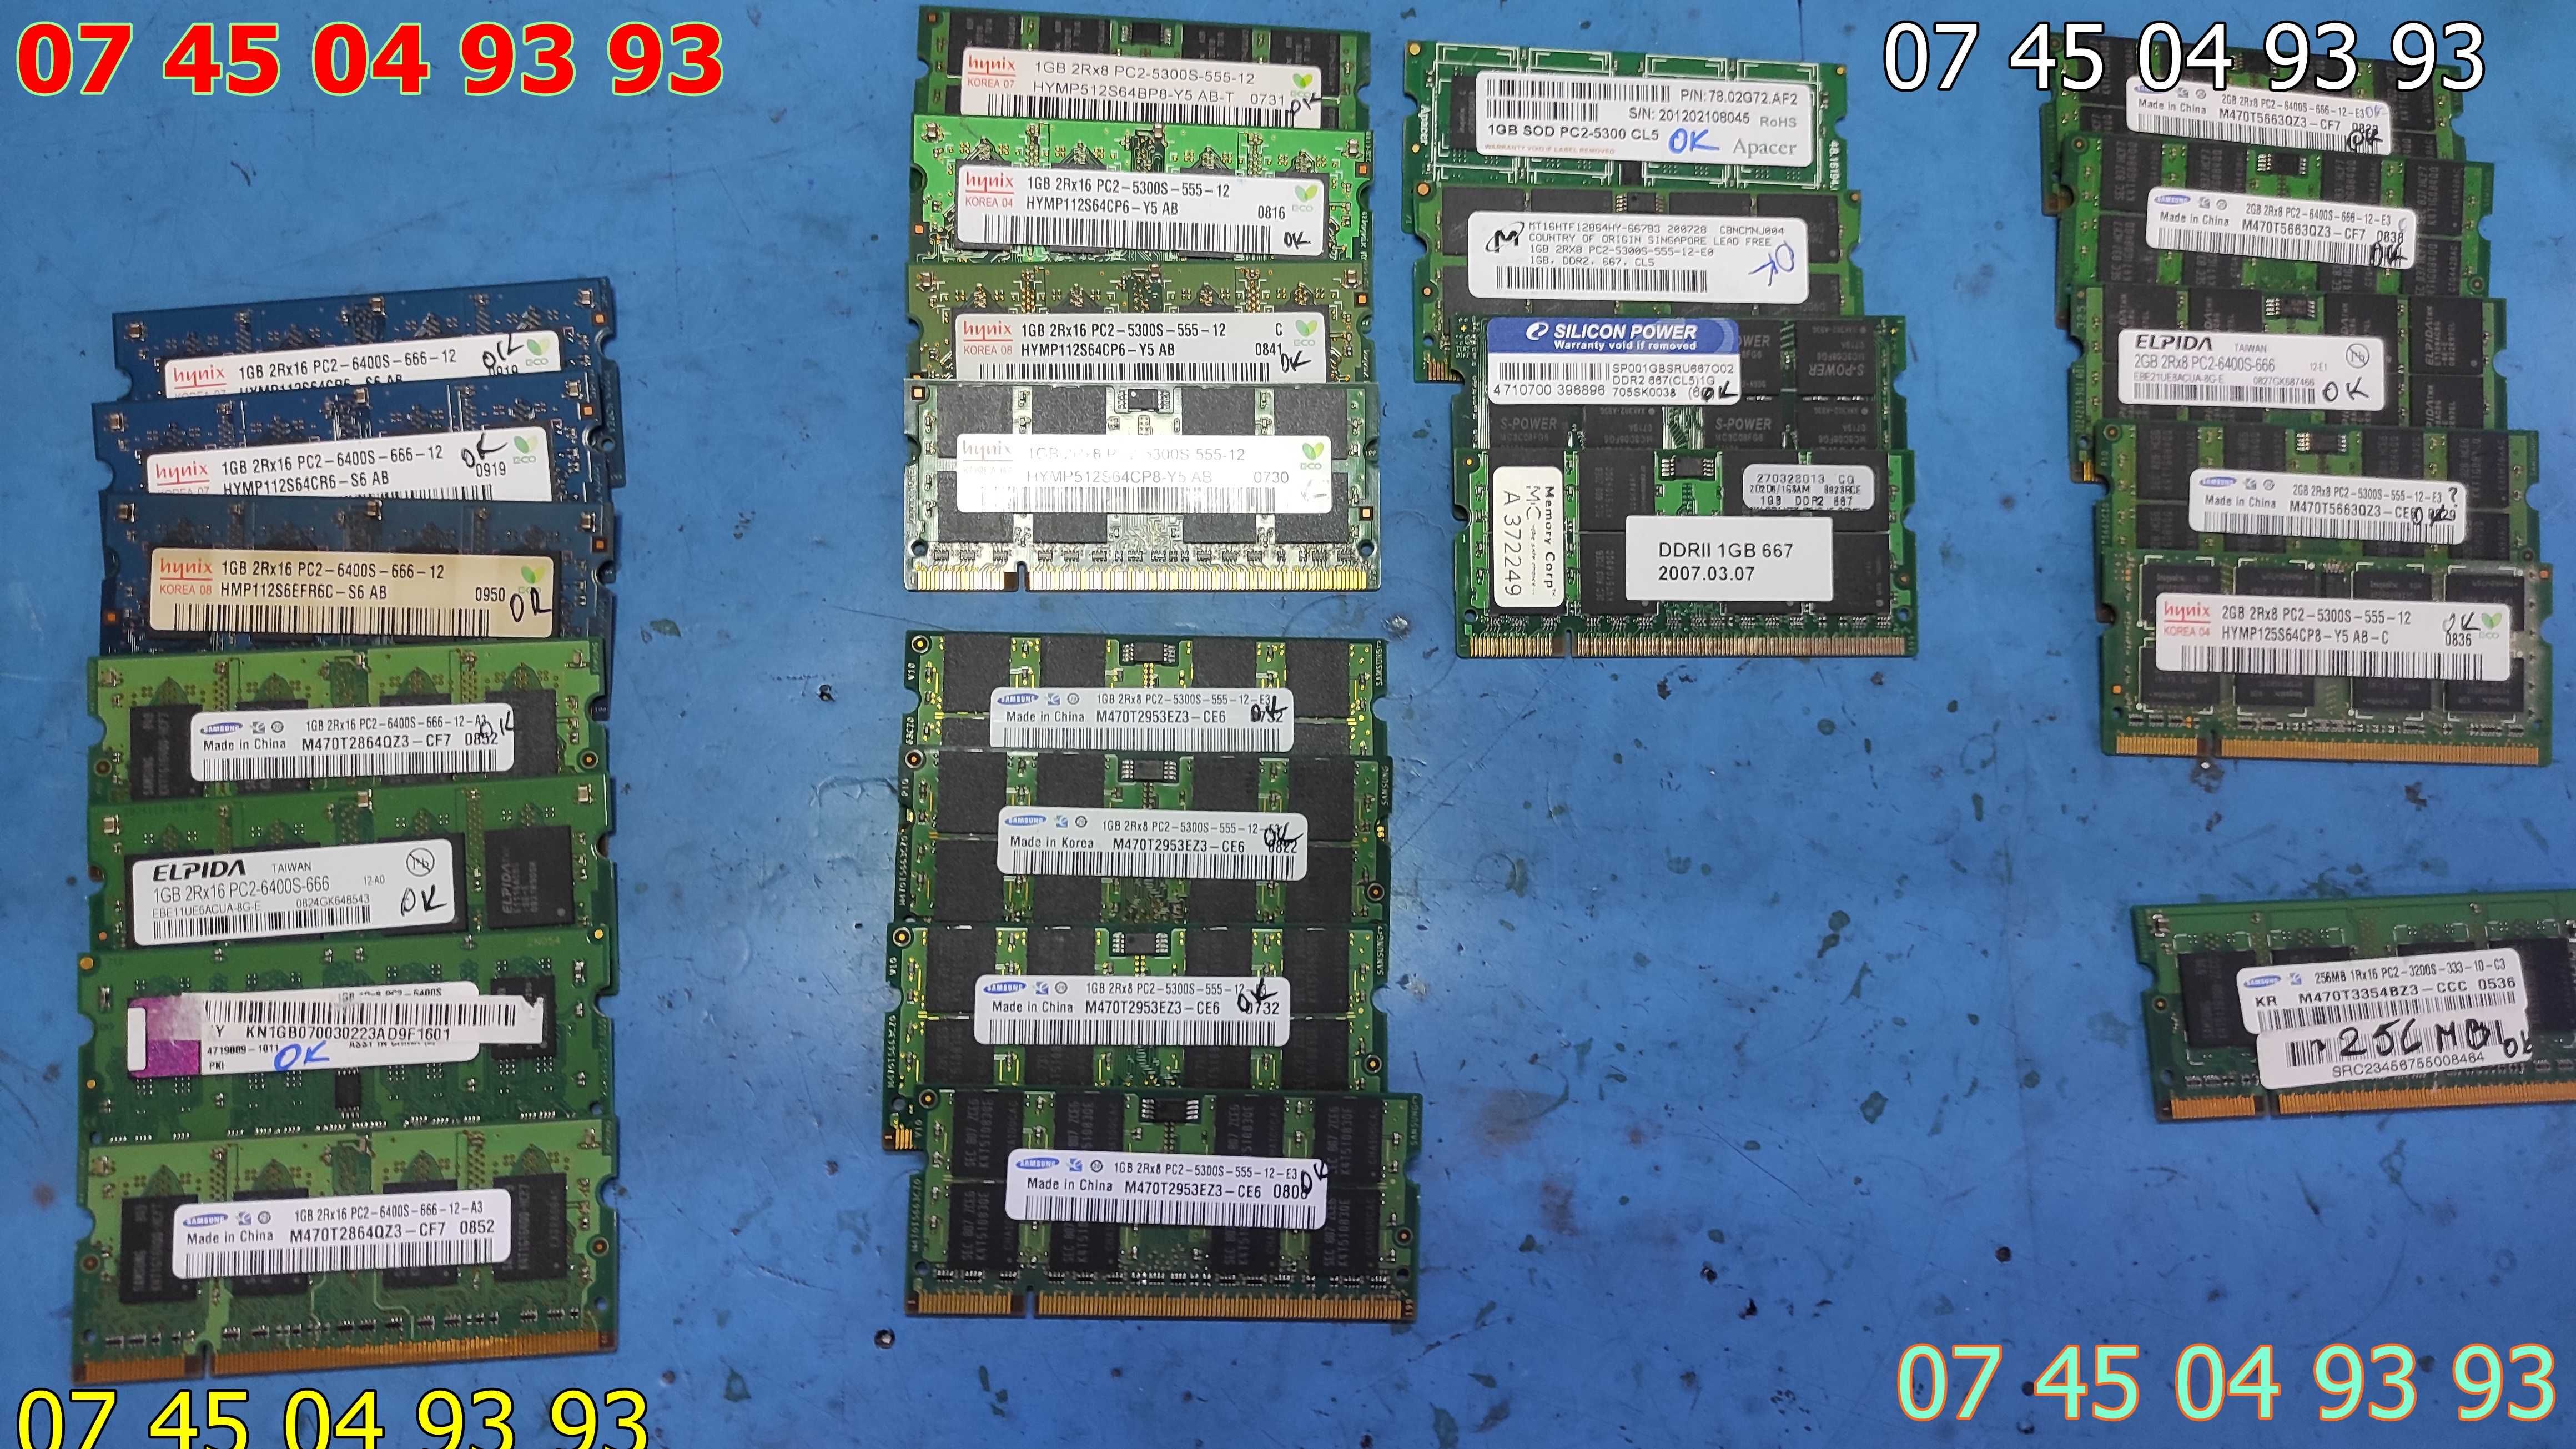 module ram laptopp DDR 2 1Gb si 2Gb testate pret in lista